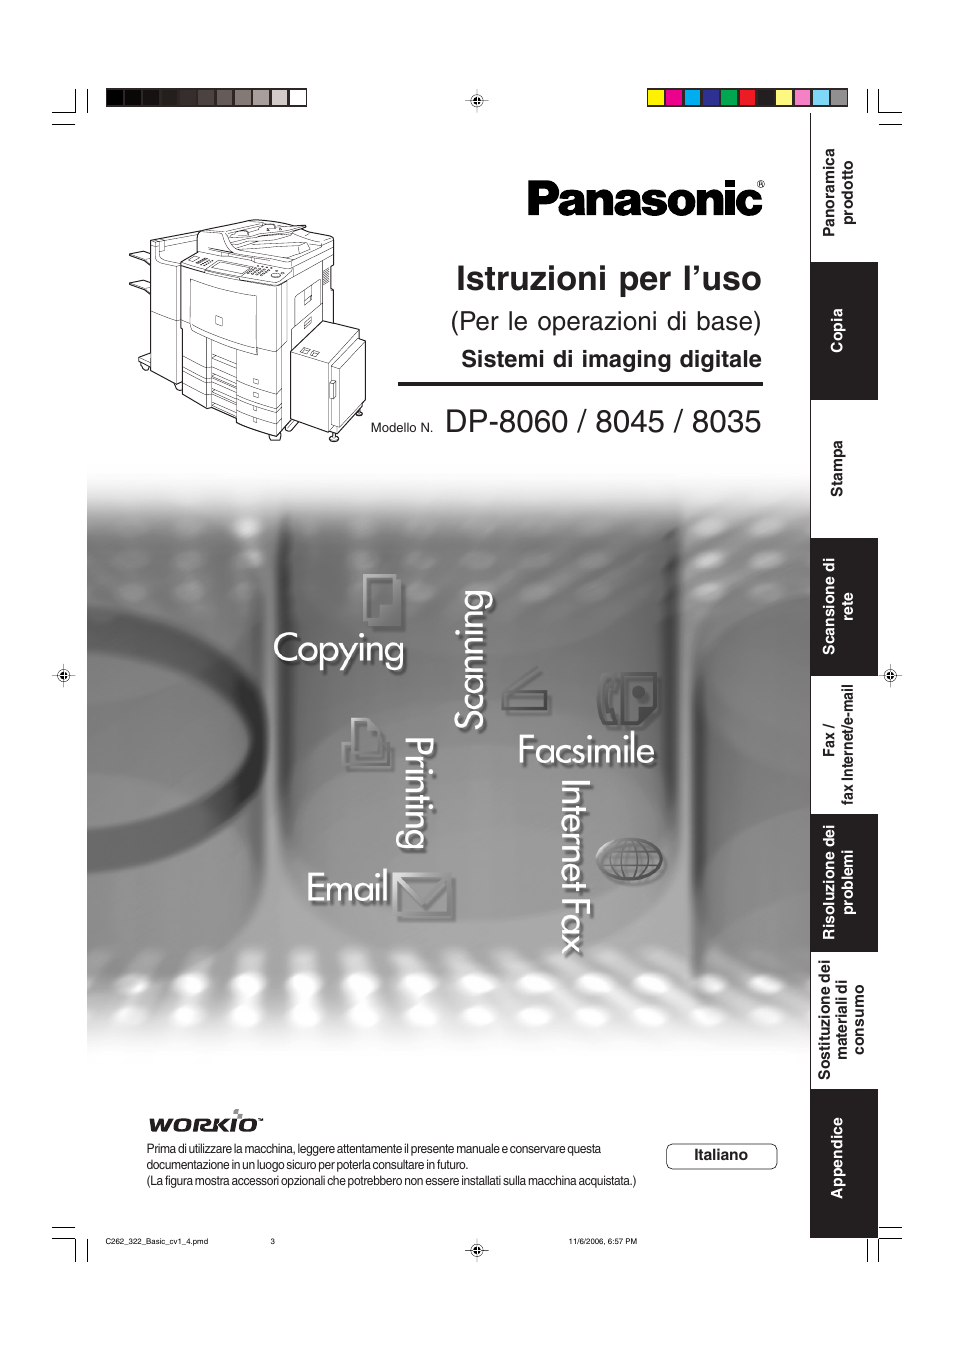 Panasonic DP8060 Manuale d'uso | Pagine: 84